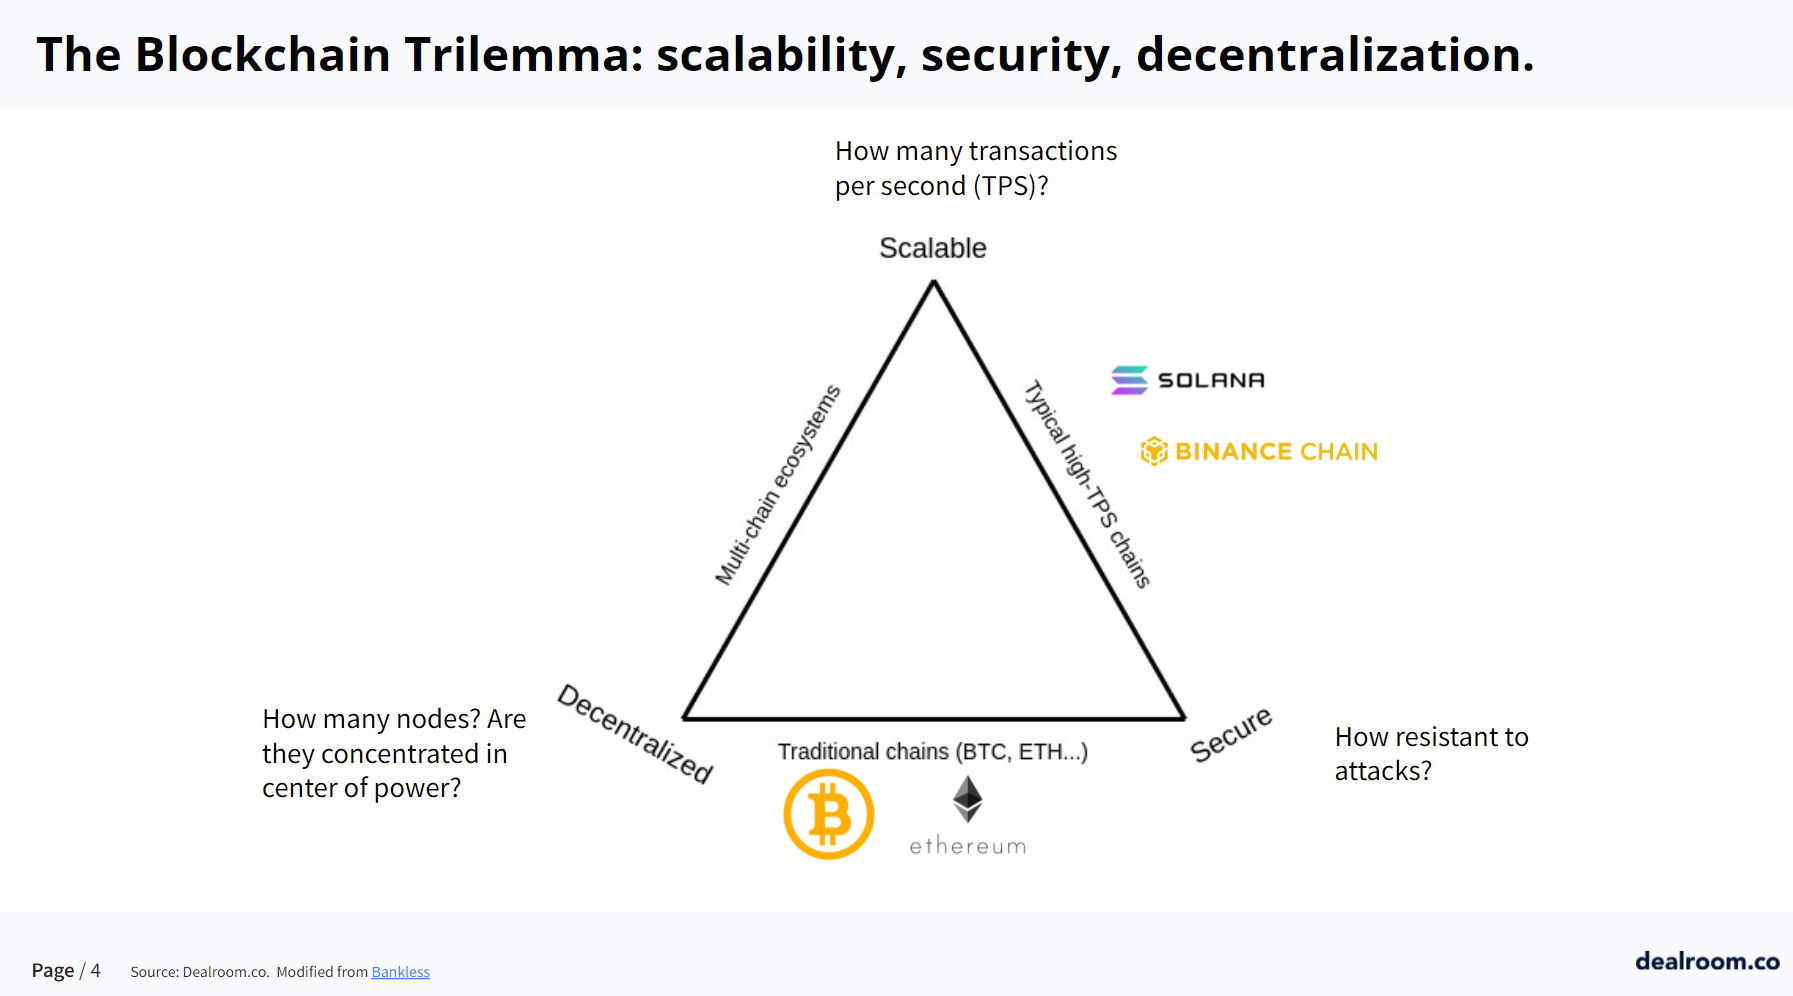 Blockchain's Trilemma